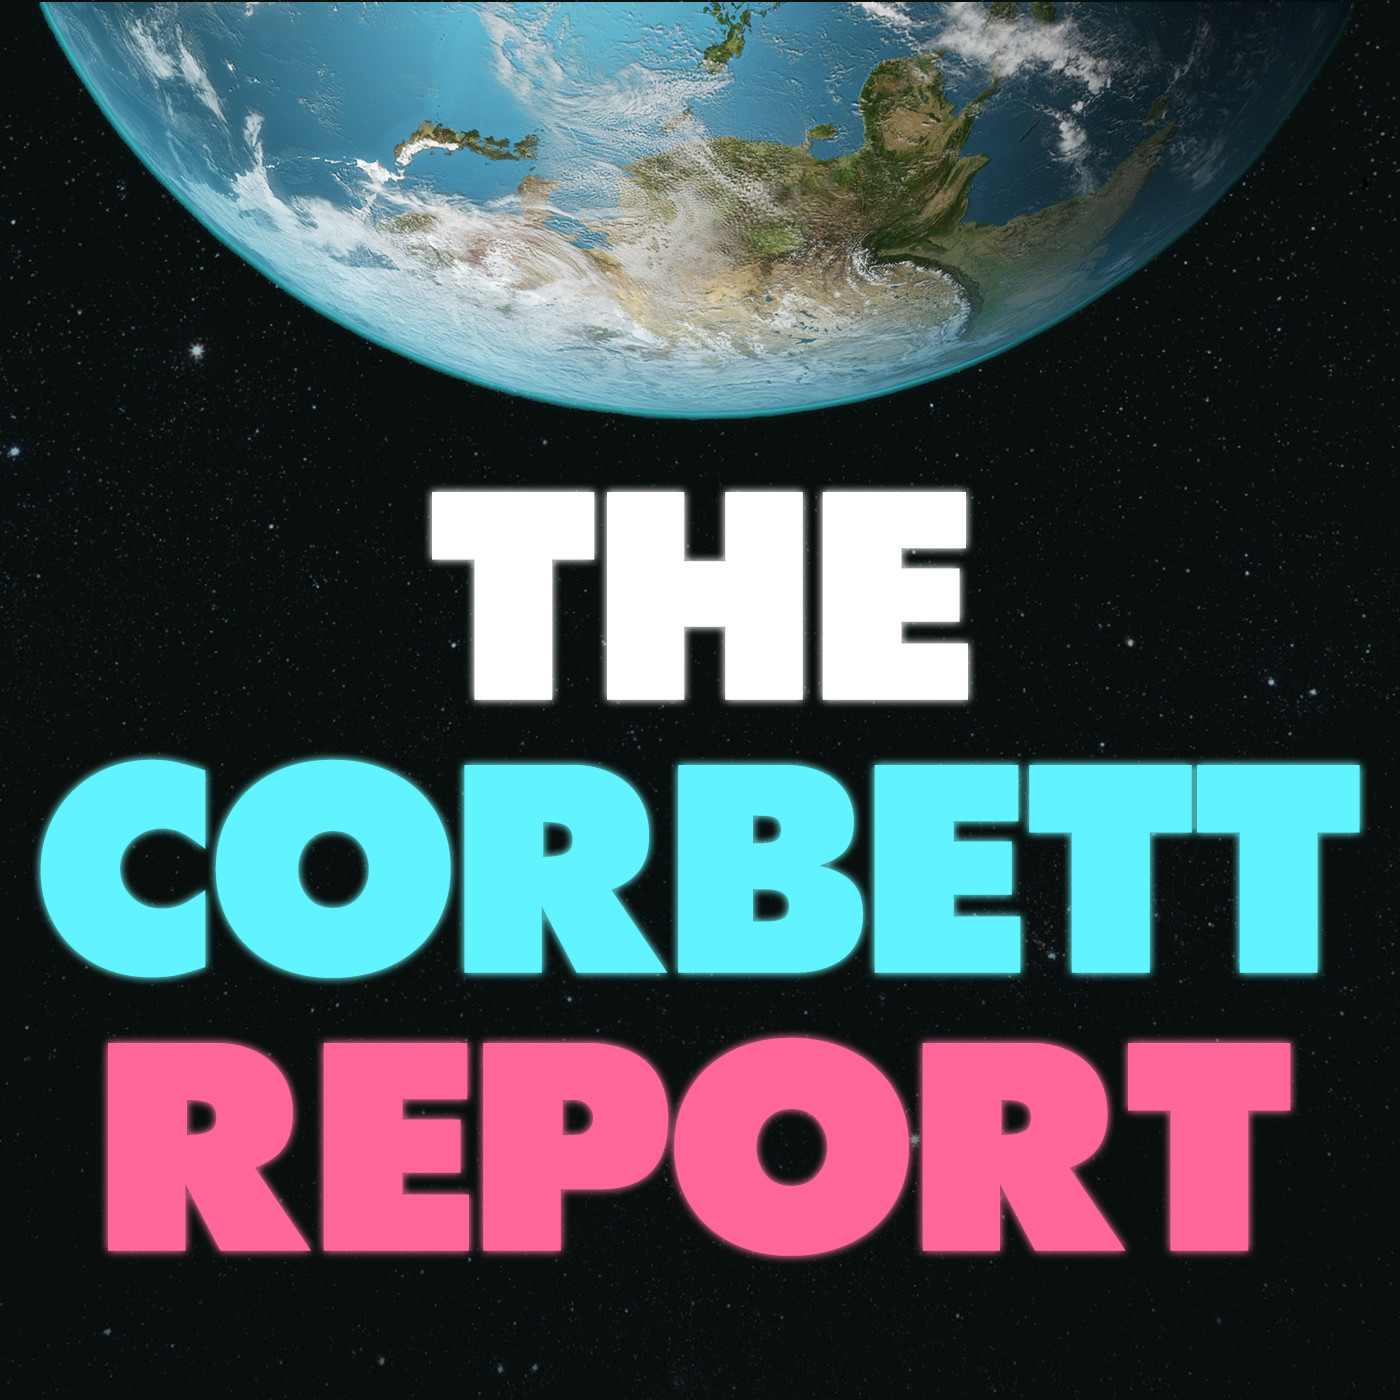 www.corbettreport.com